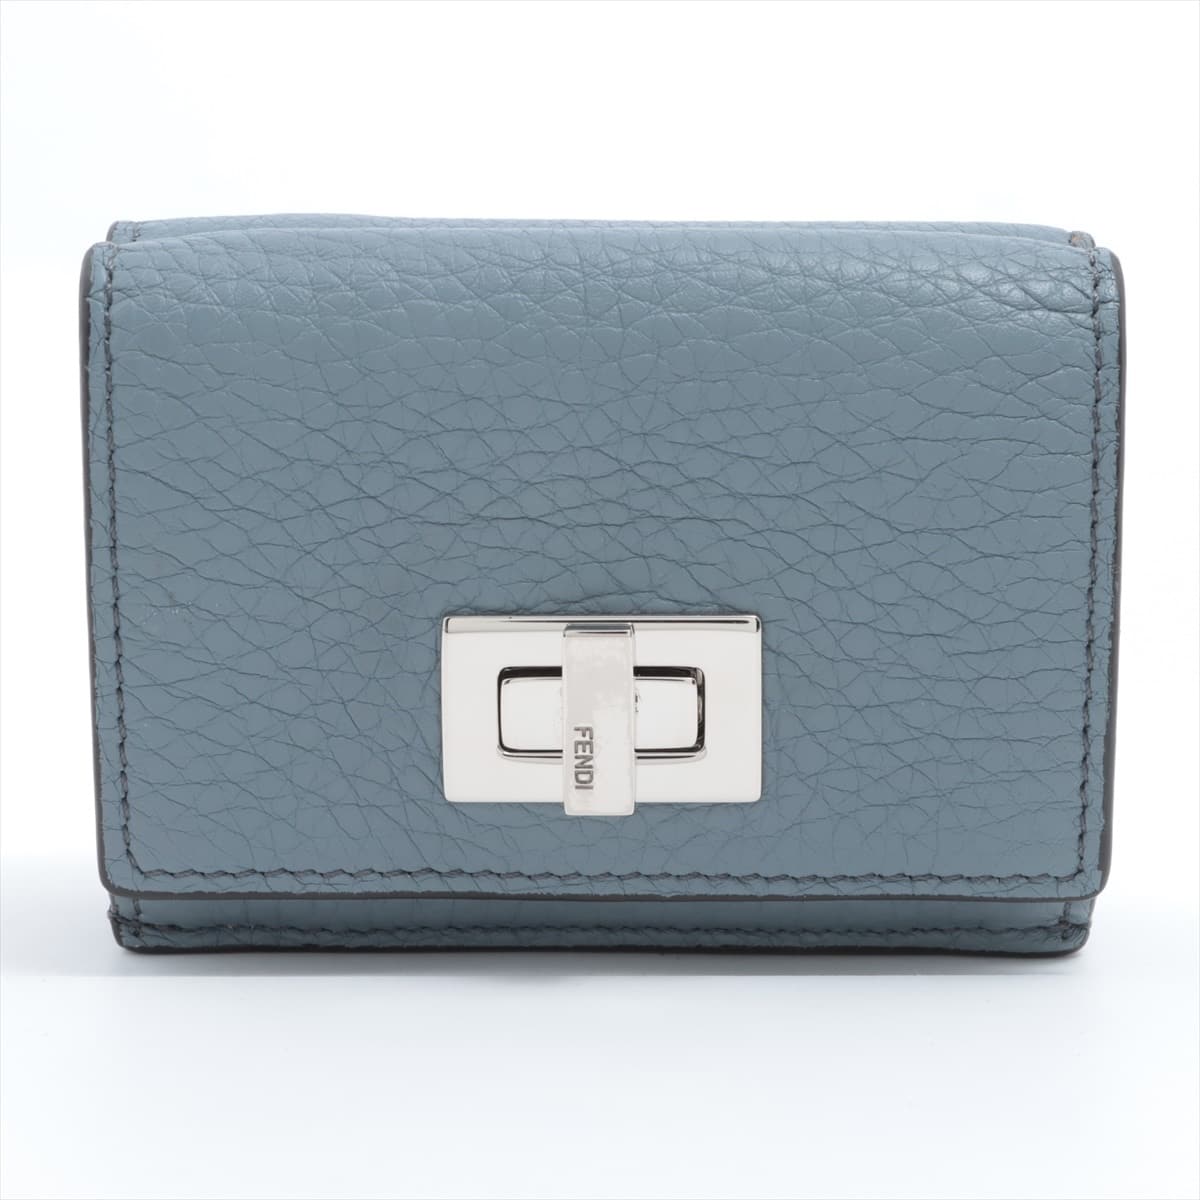 Fendi Selleria Peek-a-boo 8M0426 Leather Compact Wallet Grey